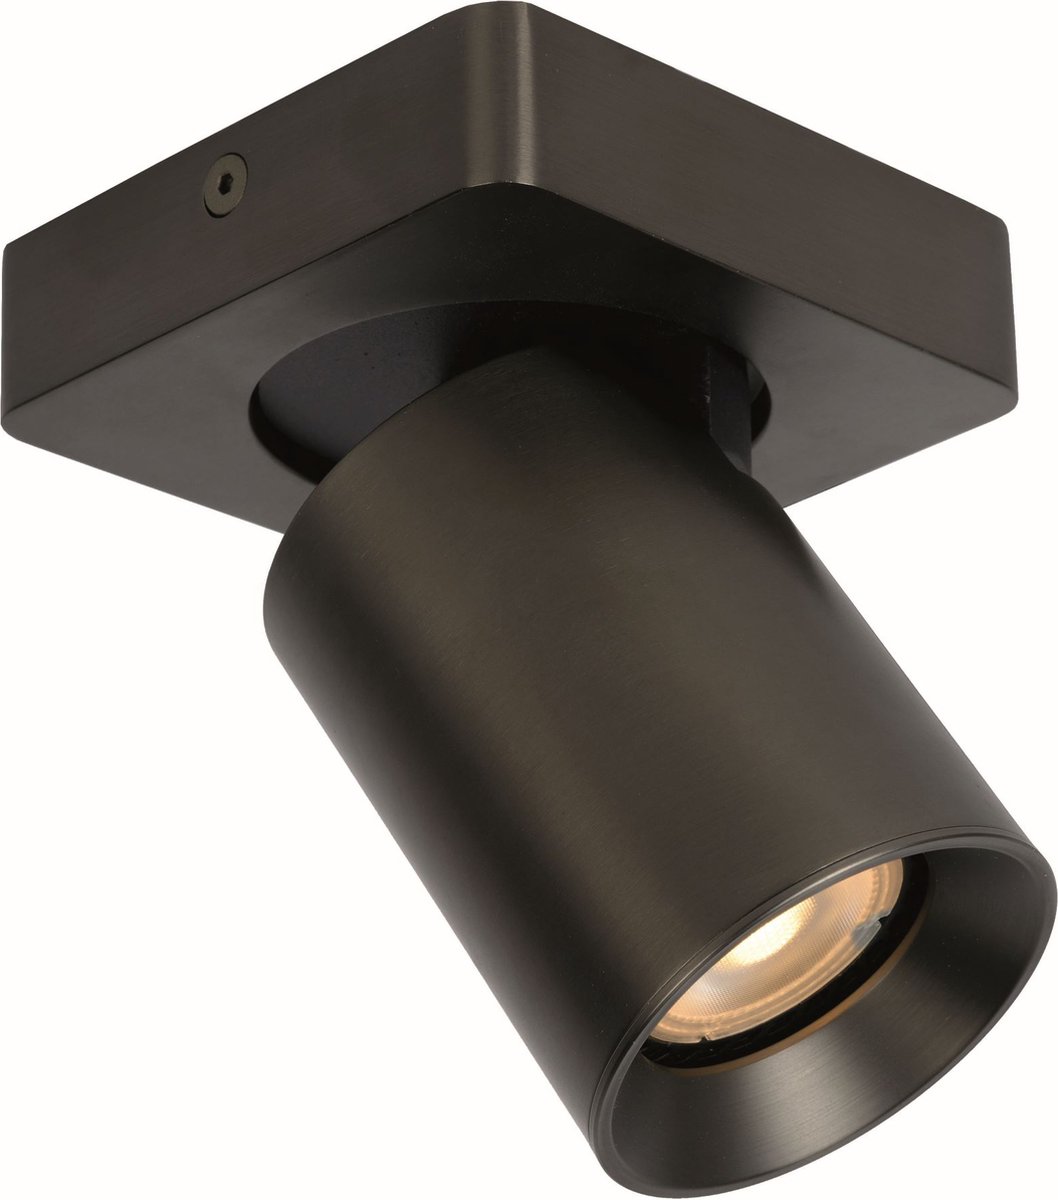 Plafondlamp Megano 1L Metallic Antraciet - 1x GU10 LED 4,8W 2700K 355lm - IP20 - Dimbaar > spots verlichting led antraciet | opbouwspot led antraciet | plafondlamp antraciet | spotje led antraciet | led lamp antraciet